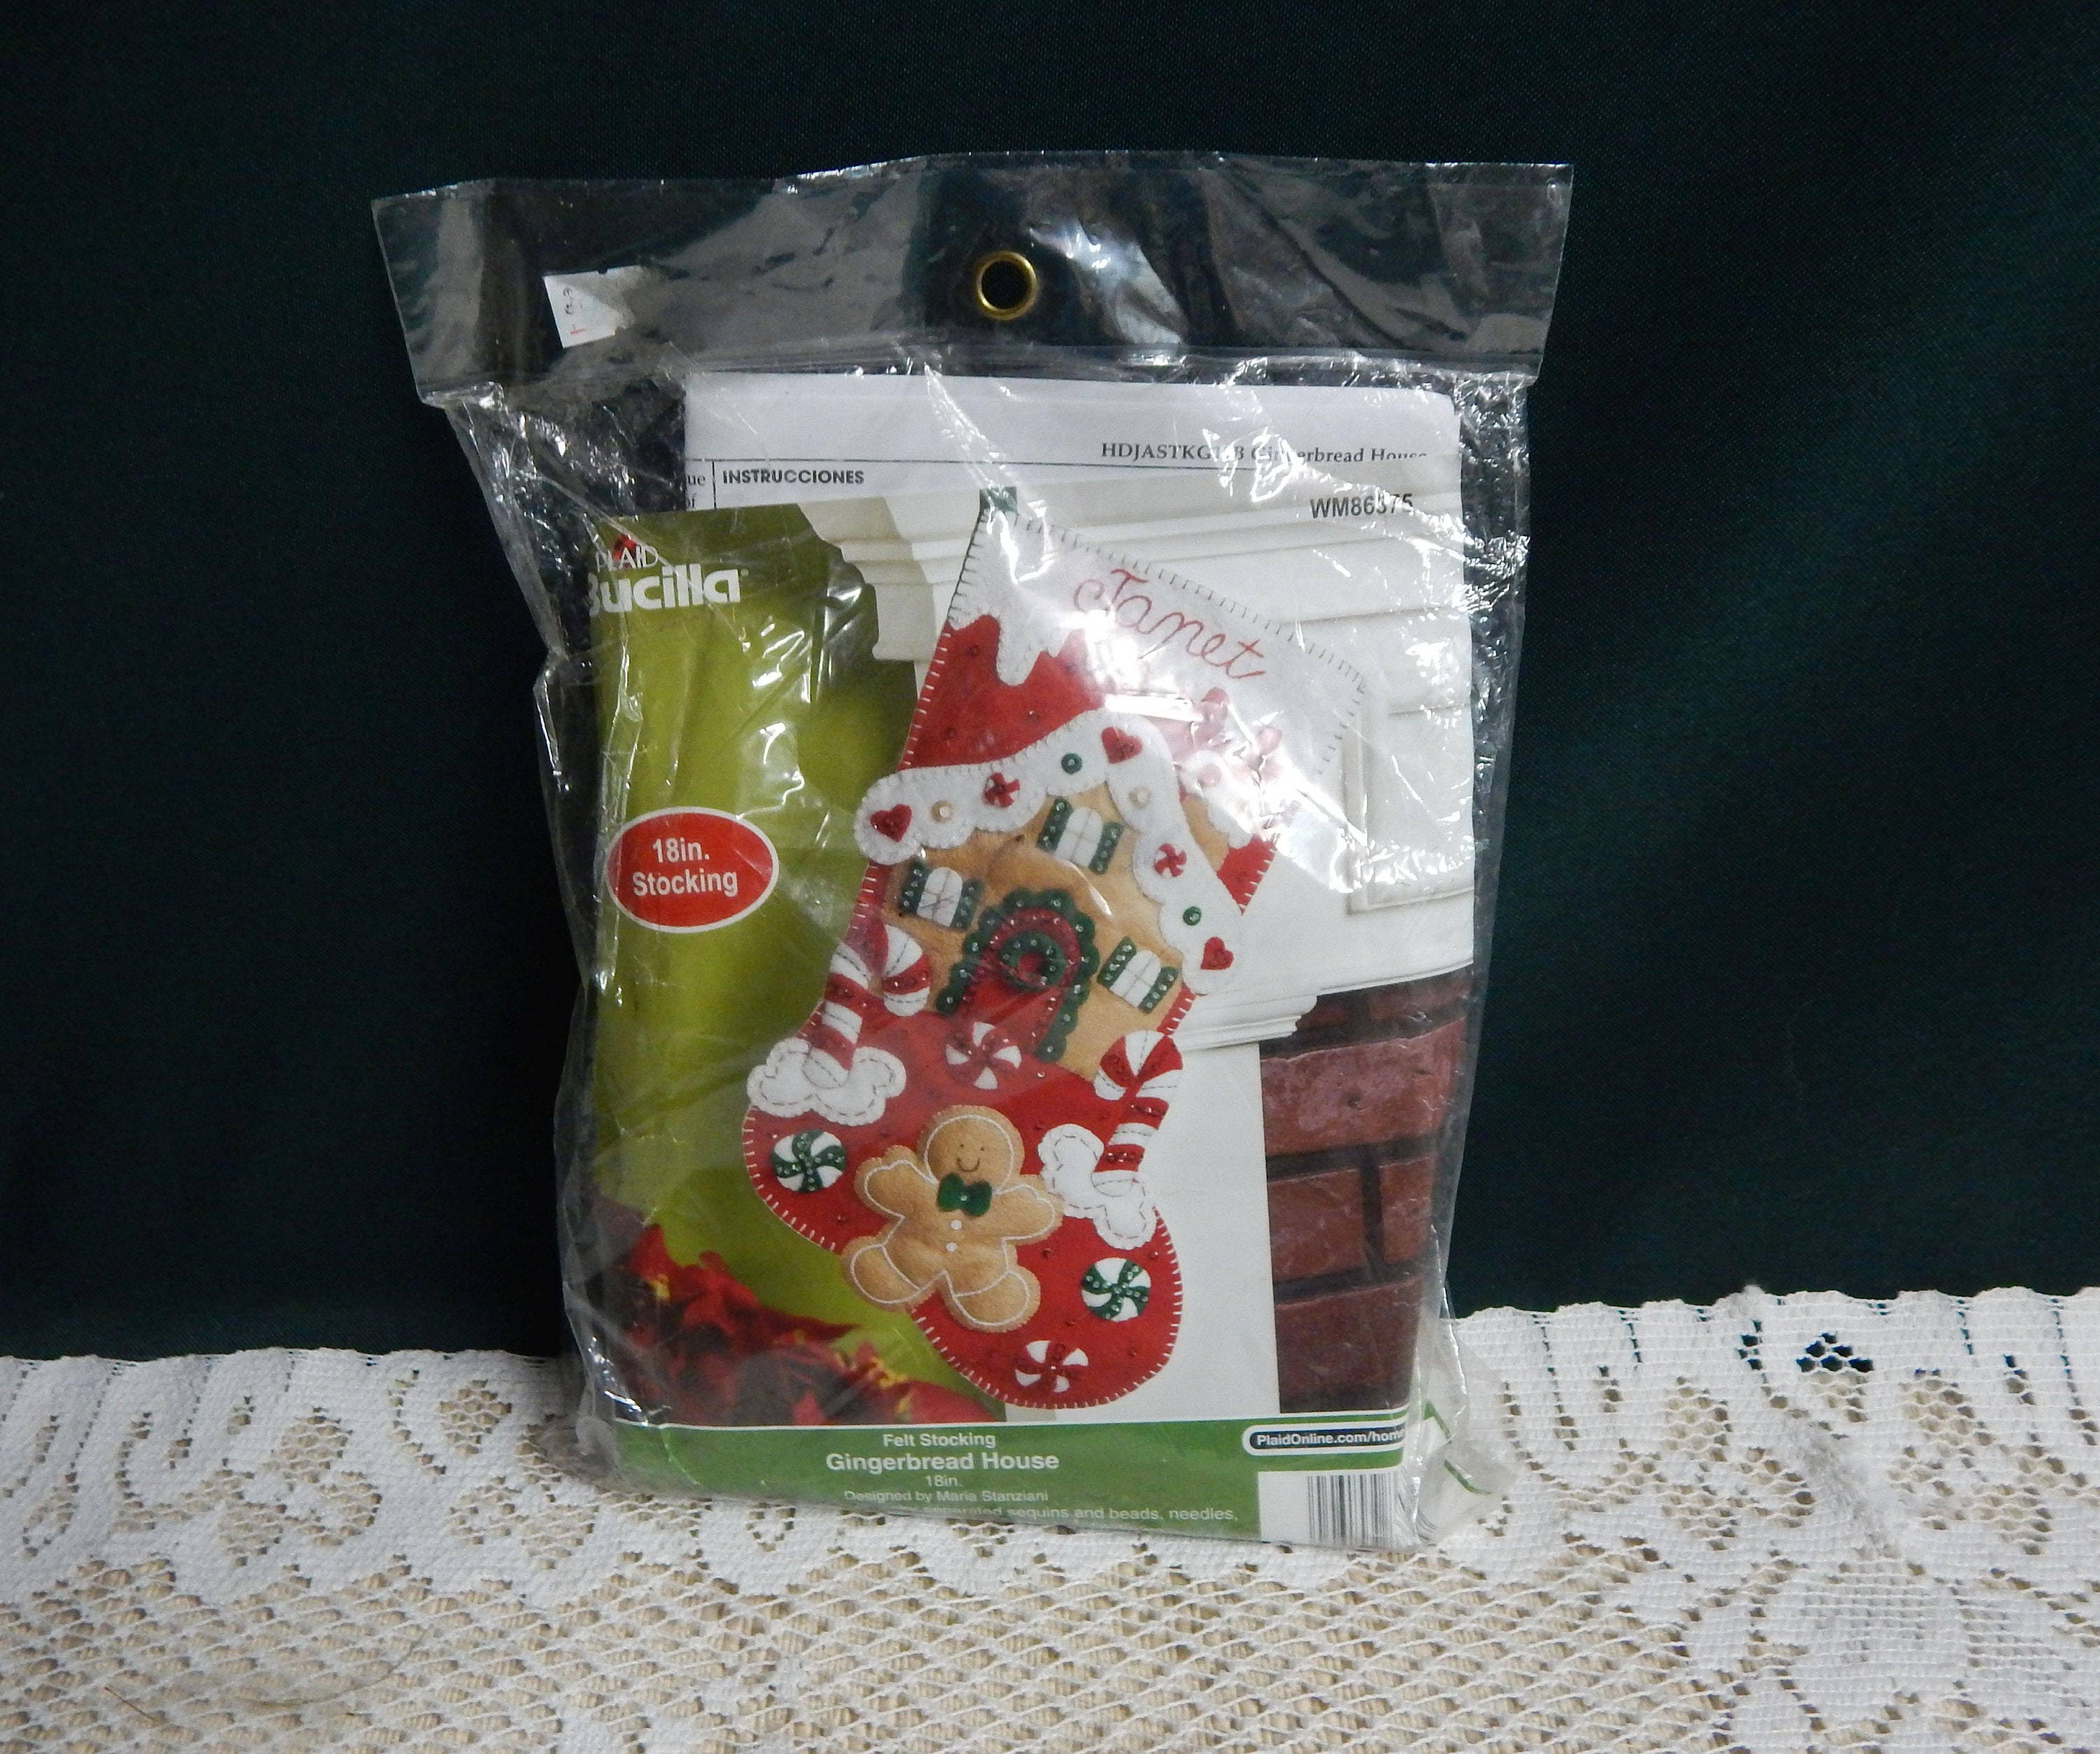 Shop Plaid Bucilla ® Seasonal - Felt - Stocking Kits - Gingerbread